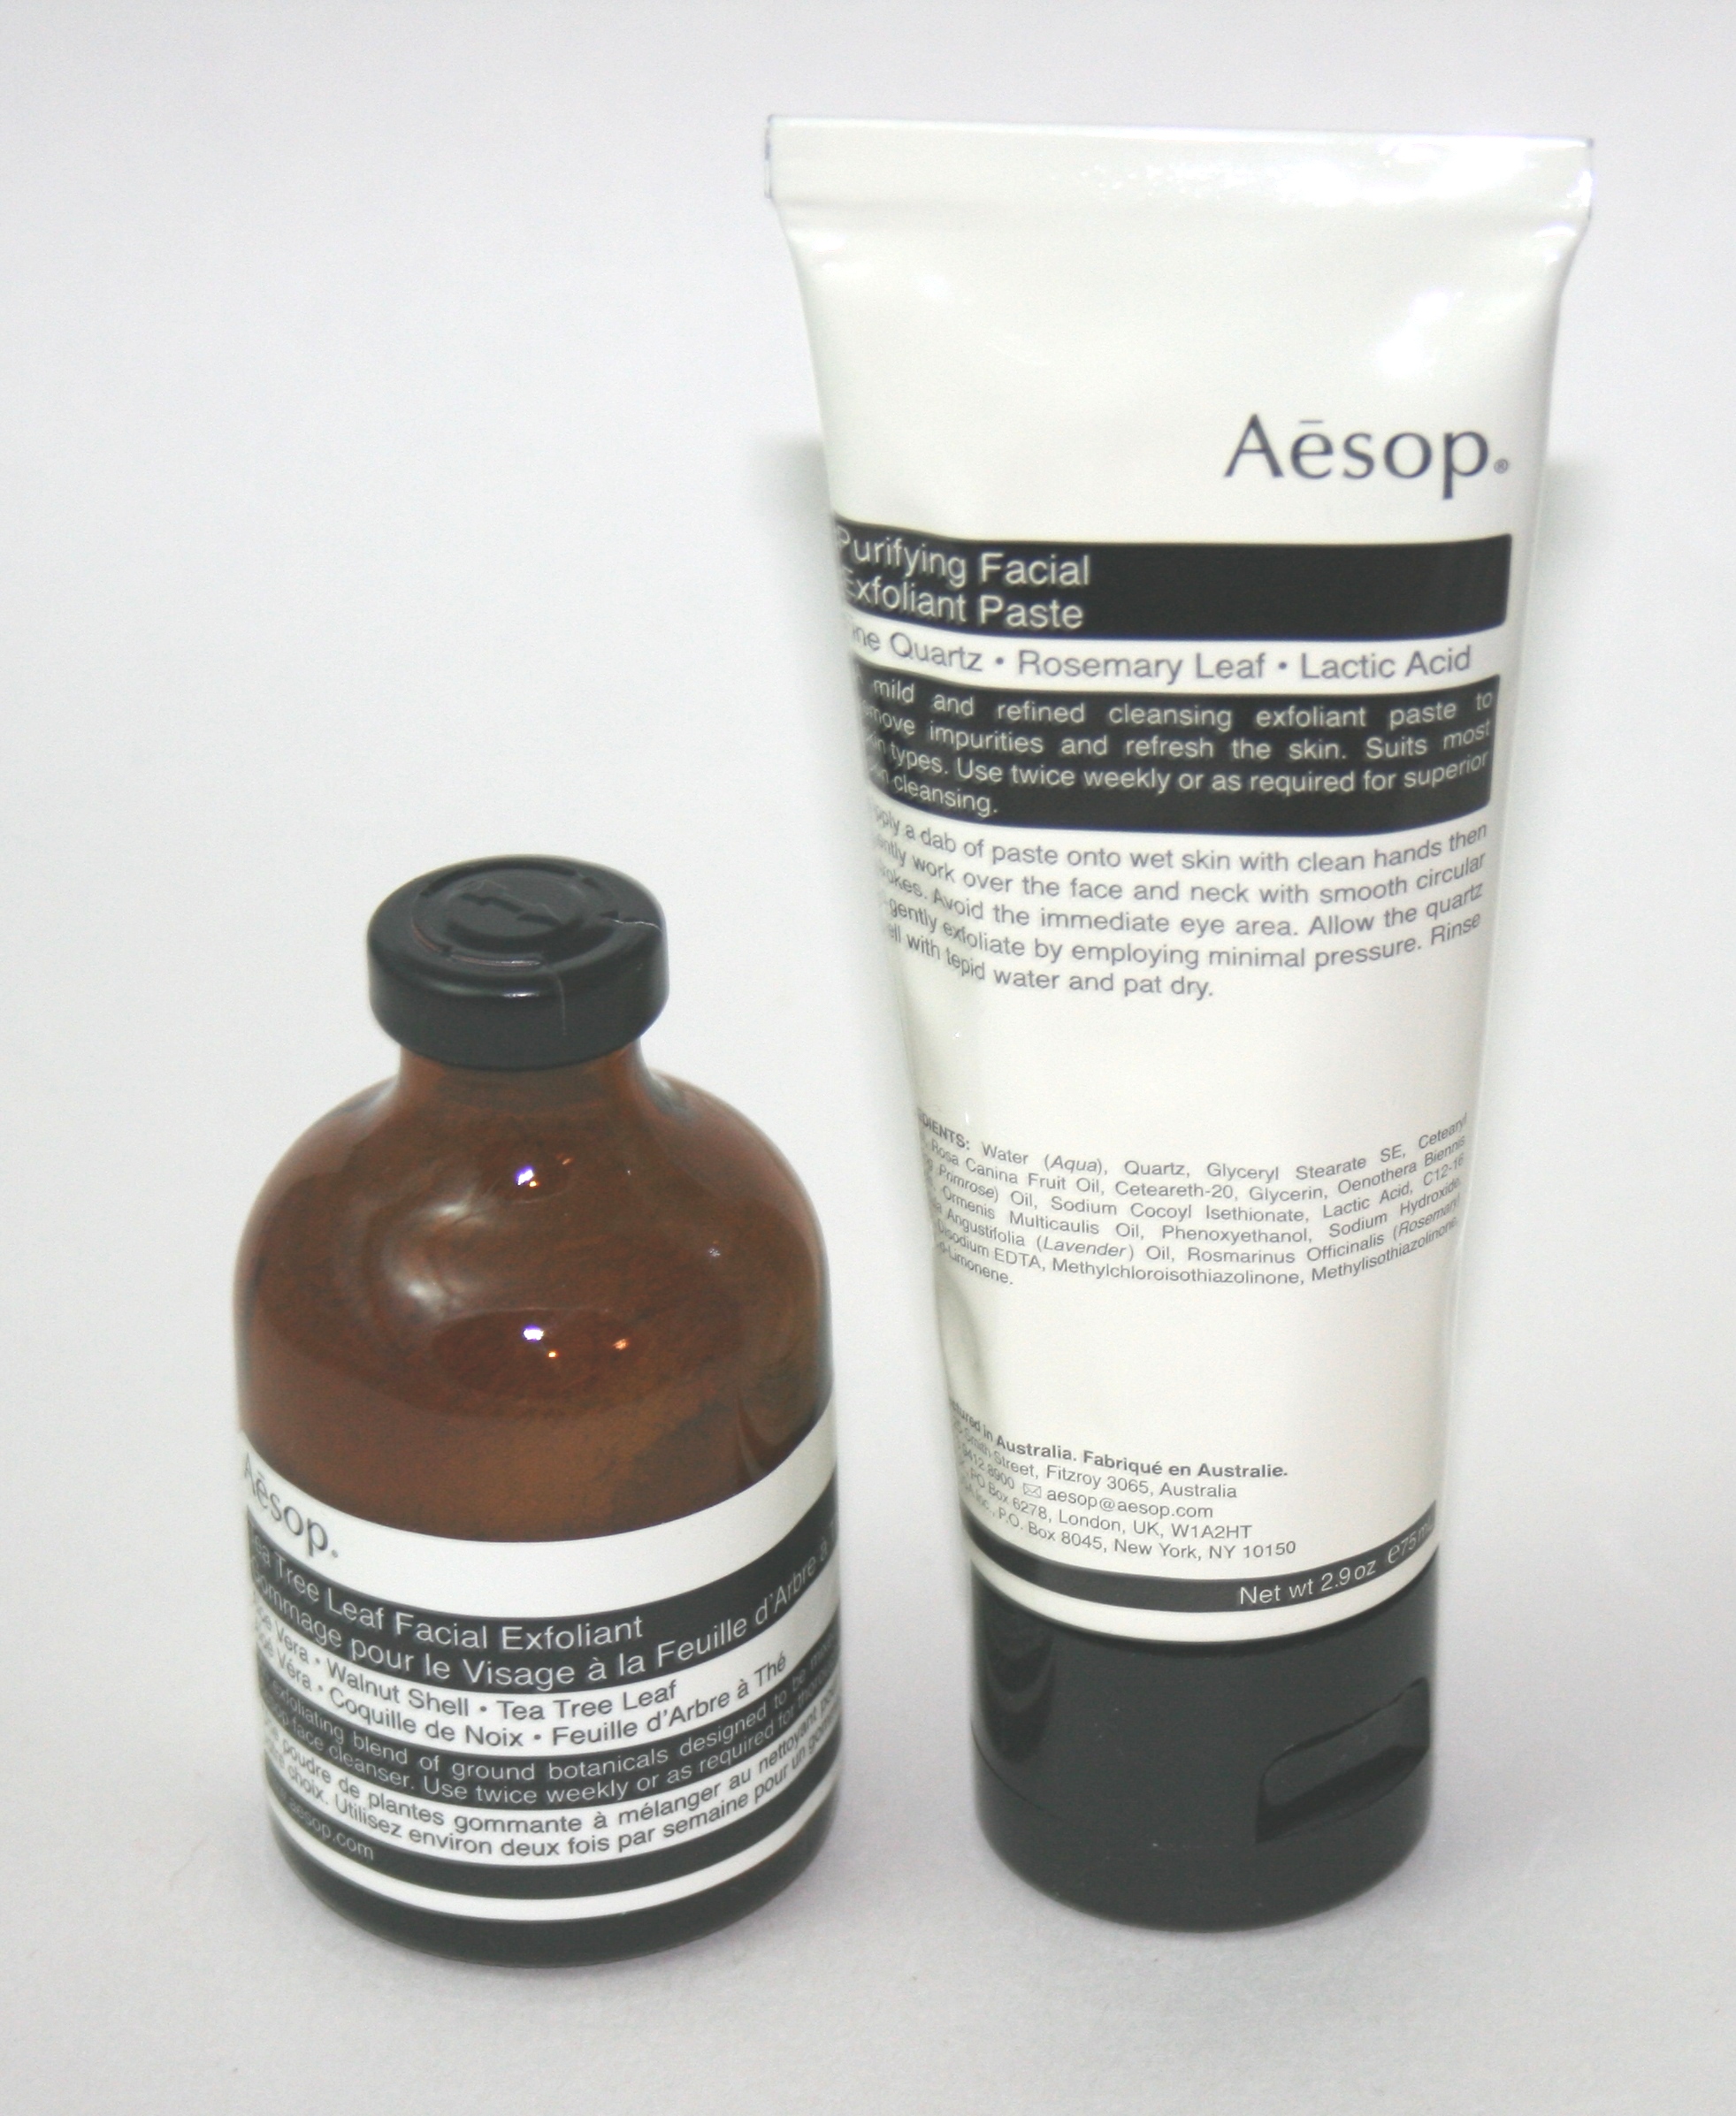 Aesop Exfoliators: Tea Tree Leaf Facial Exfoliant and Purifying Facial Exfoliant Paste